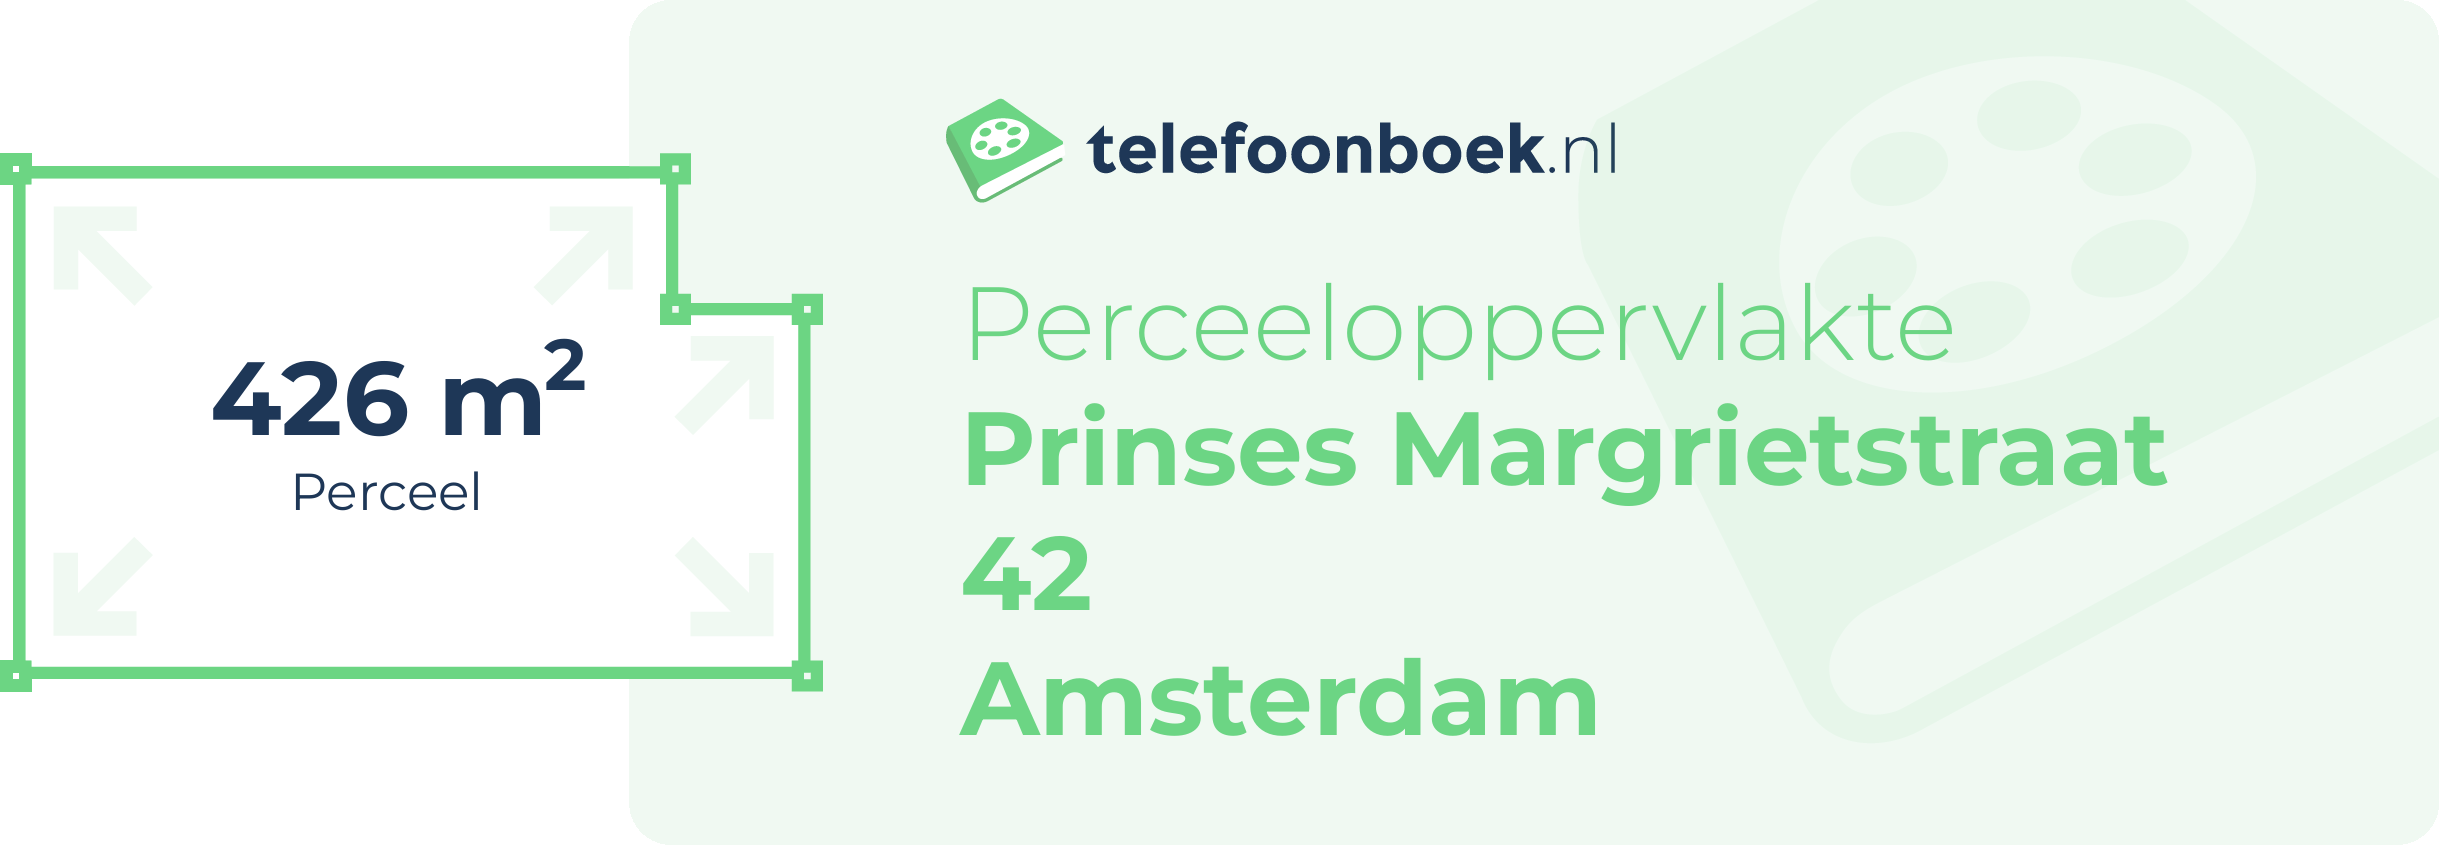 Perceeloppervlakte Prinses Margrietstraat 42 Amsterdam